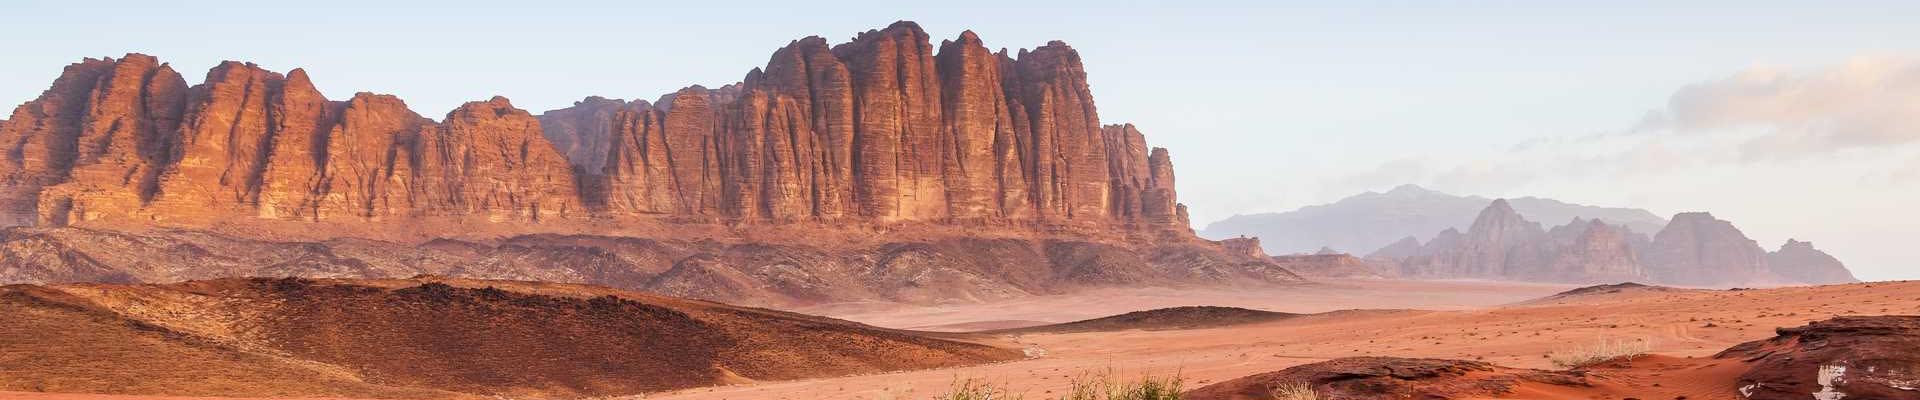 Go Jordan Travel and Tourism Announces Exclusive Holyland Tour Jordan